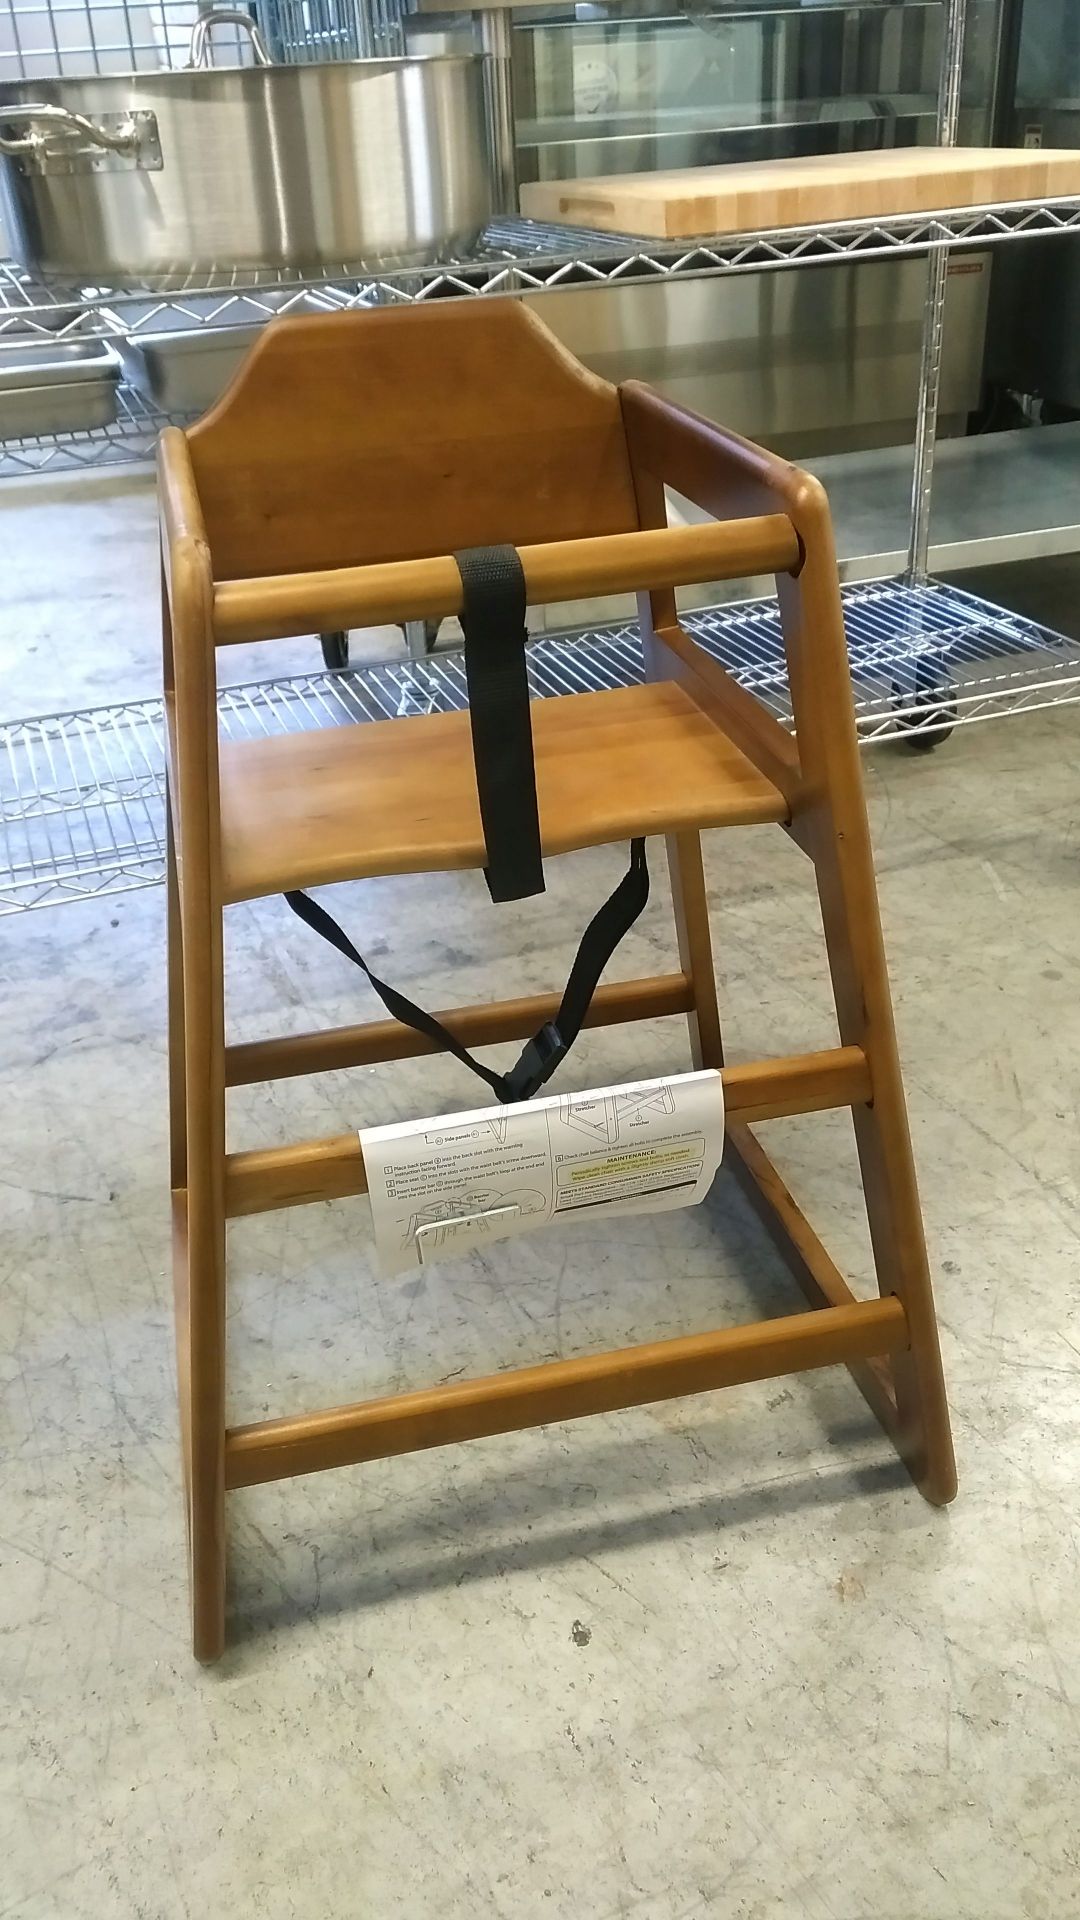 Walnut High Chair, Johnson-Rose 4506 - Image 3 of 3